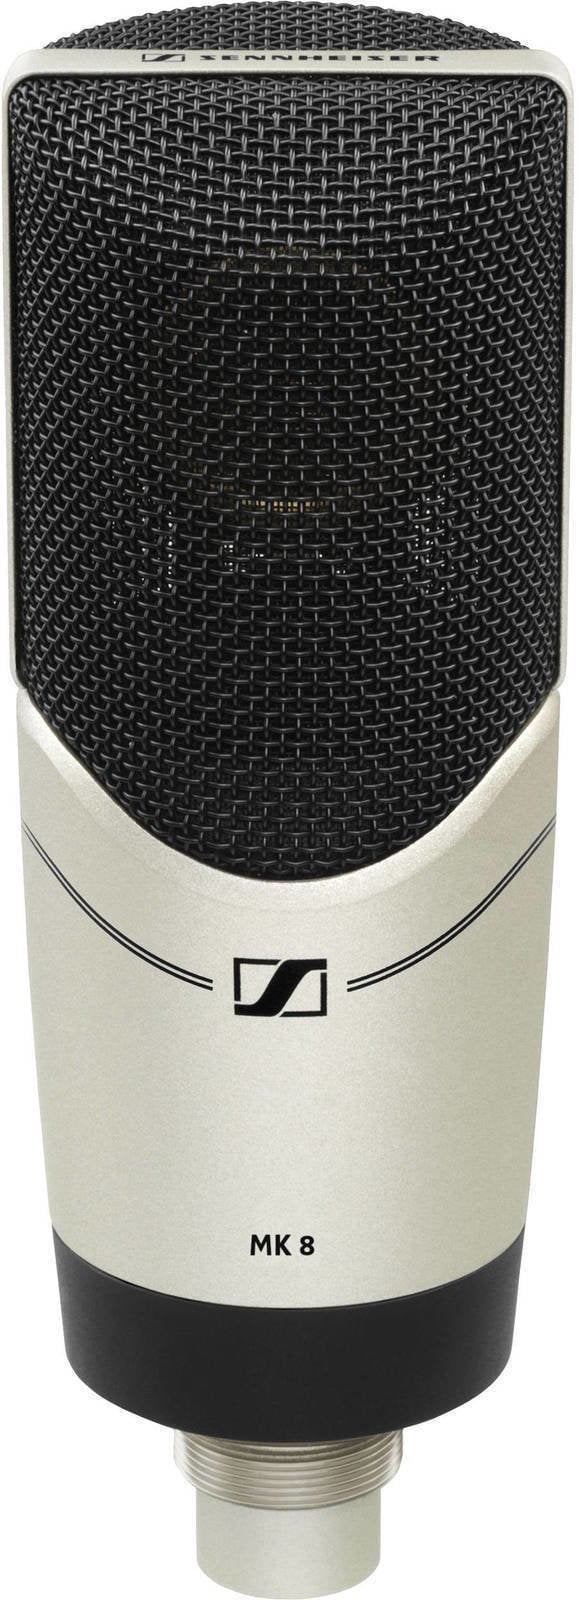 Mikrofon pojemnosciowy studyjny Sennheiser MK 8 Mikrofon pojemnosciowy studyjny